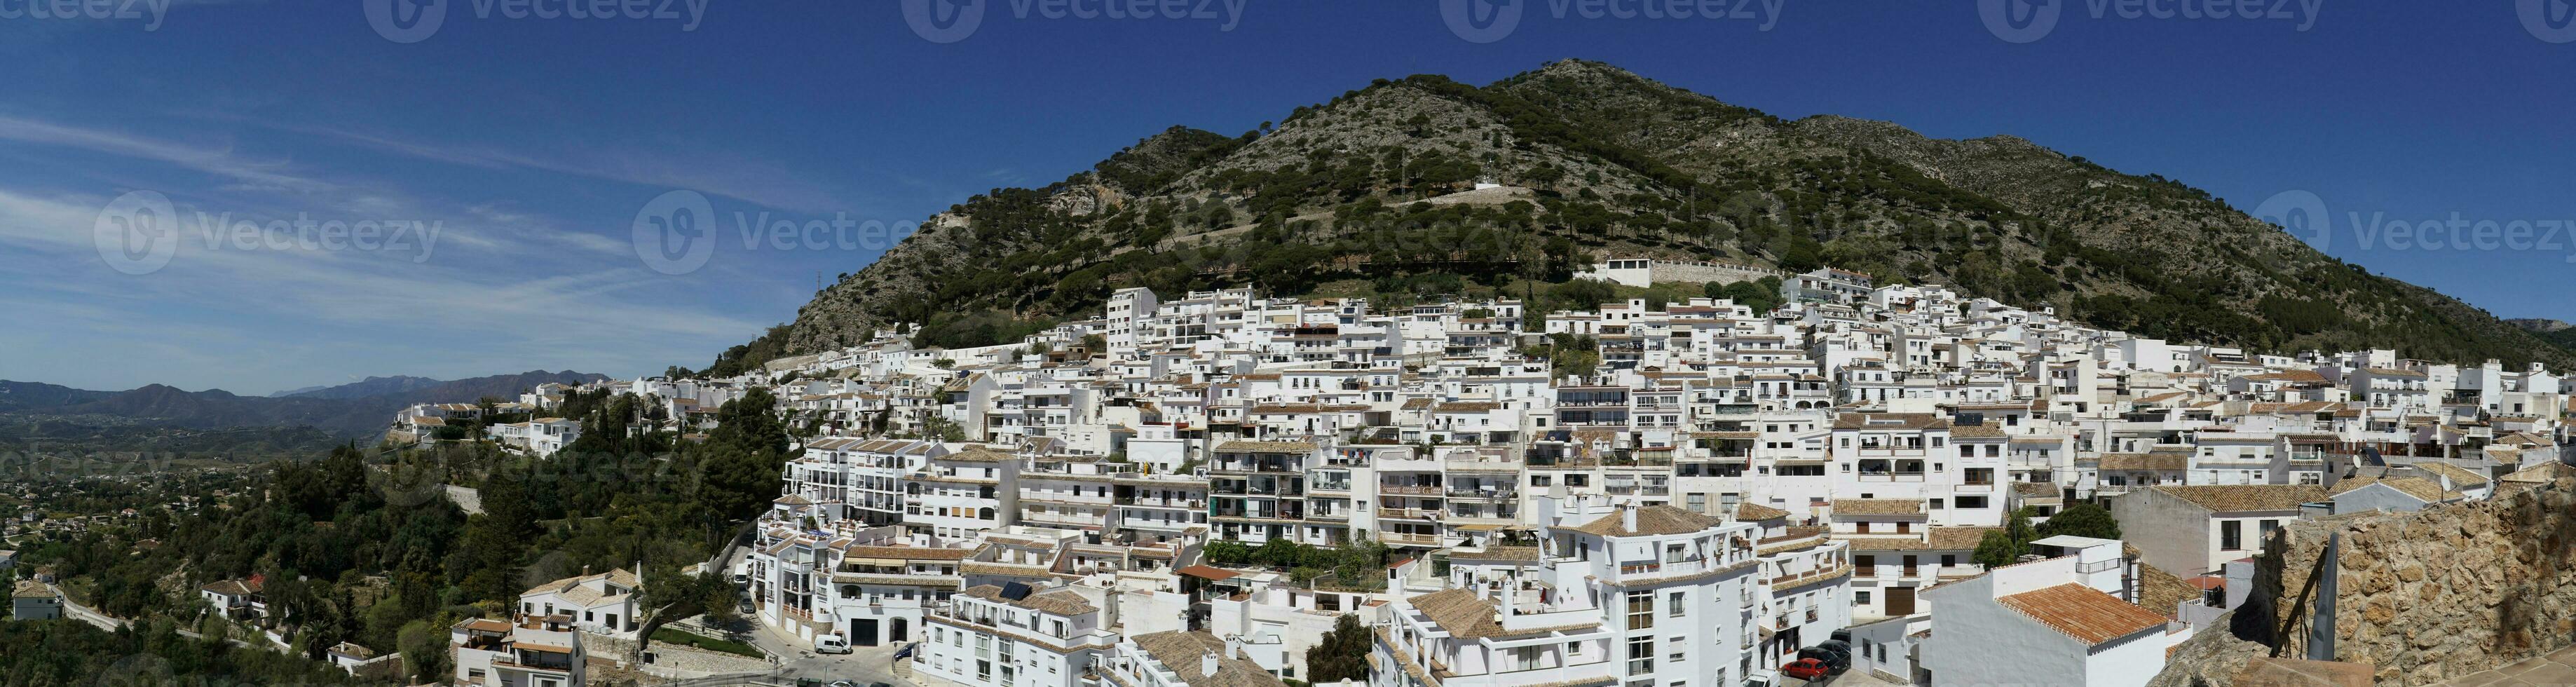 panoramisch visie van de mijas stad, Andalusië, Spanje foto